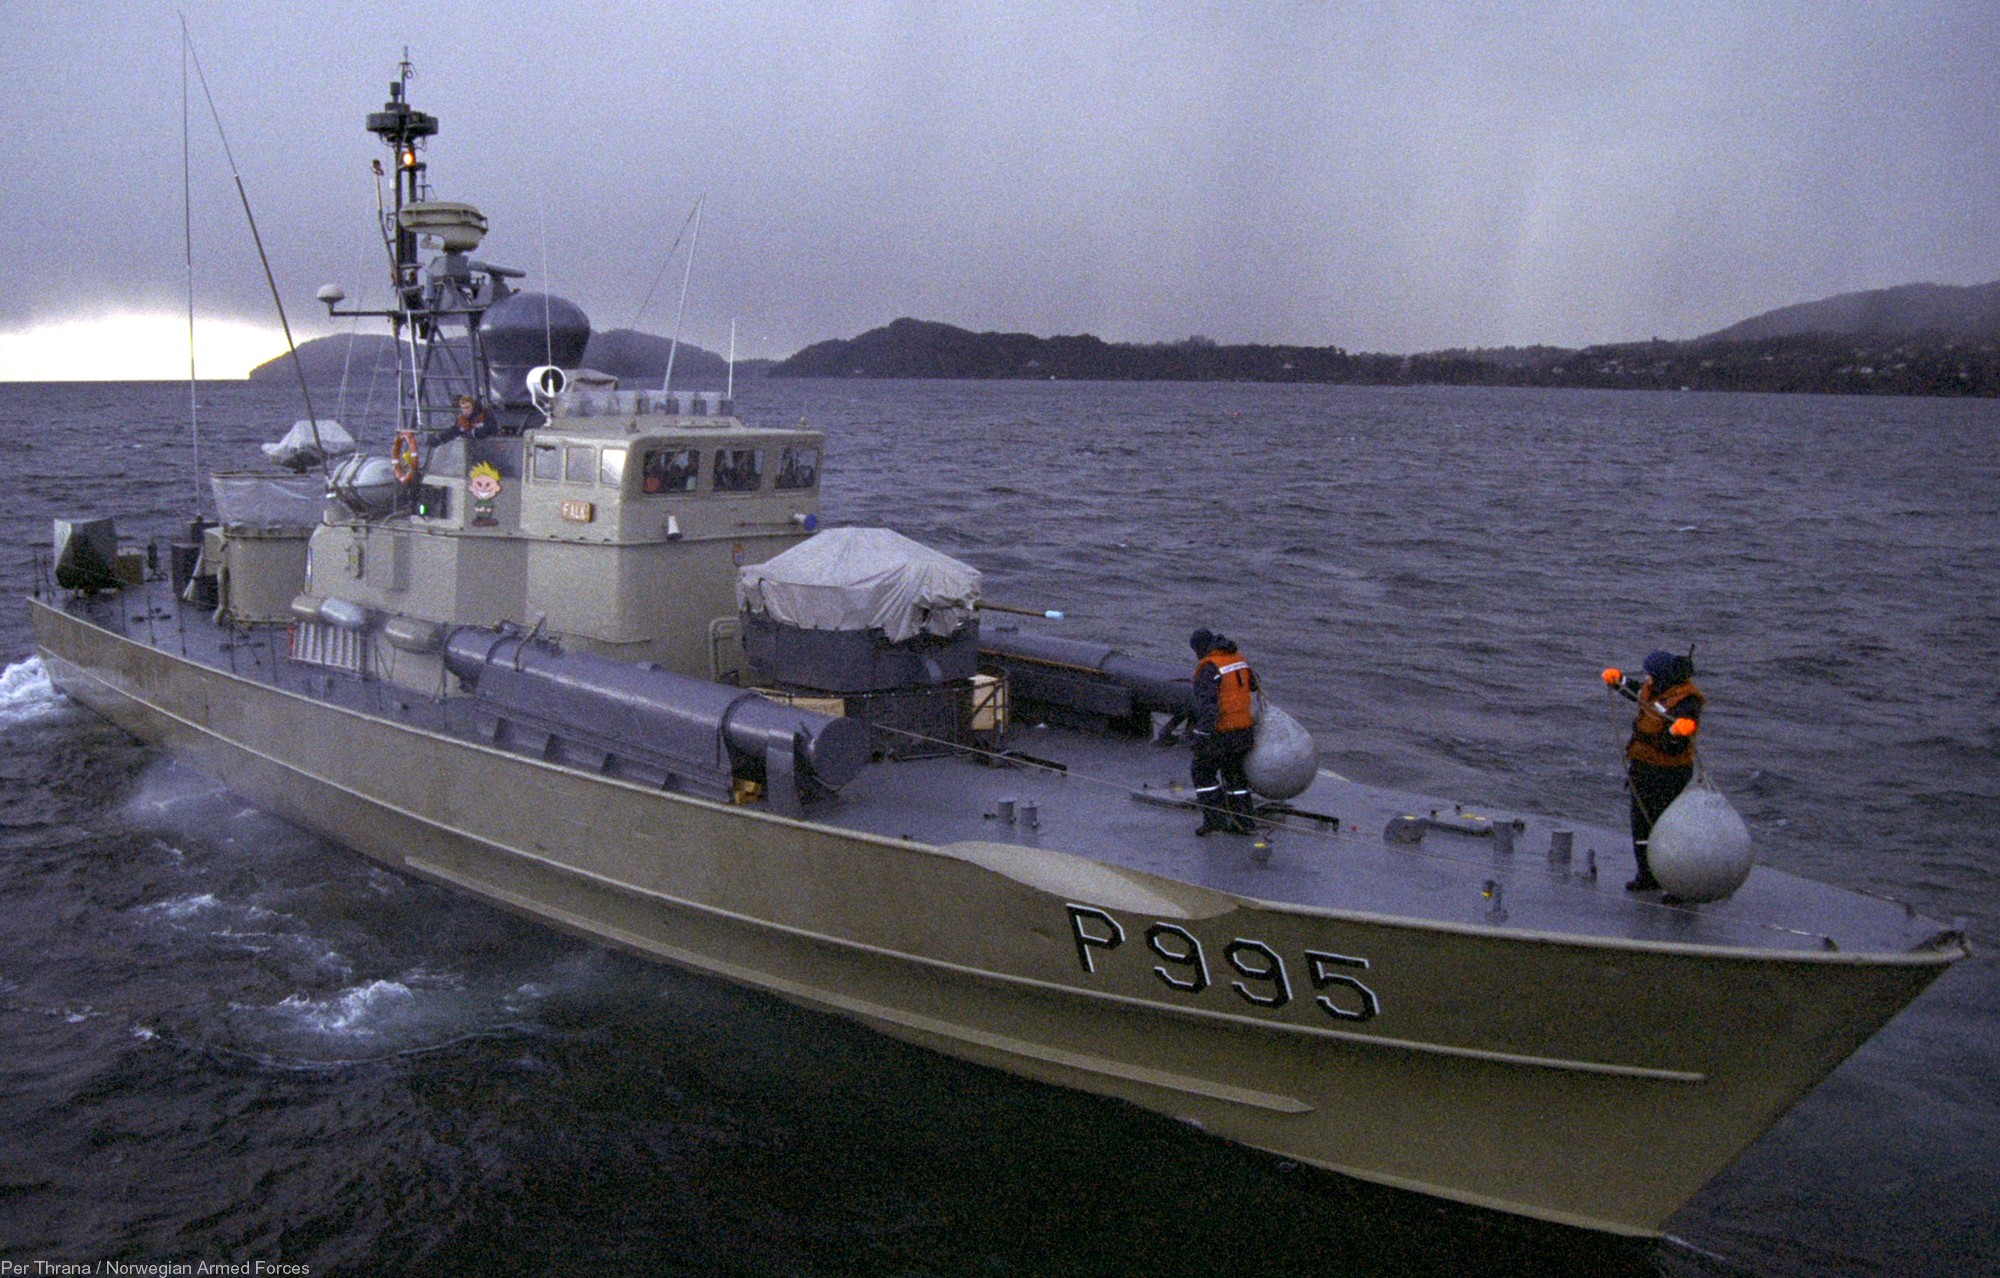 p-995 knm falk hauk class fast attack missile torpedo craft boat norwegian navy sjøforsvaret 02